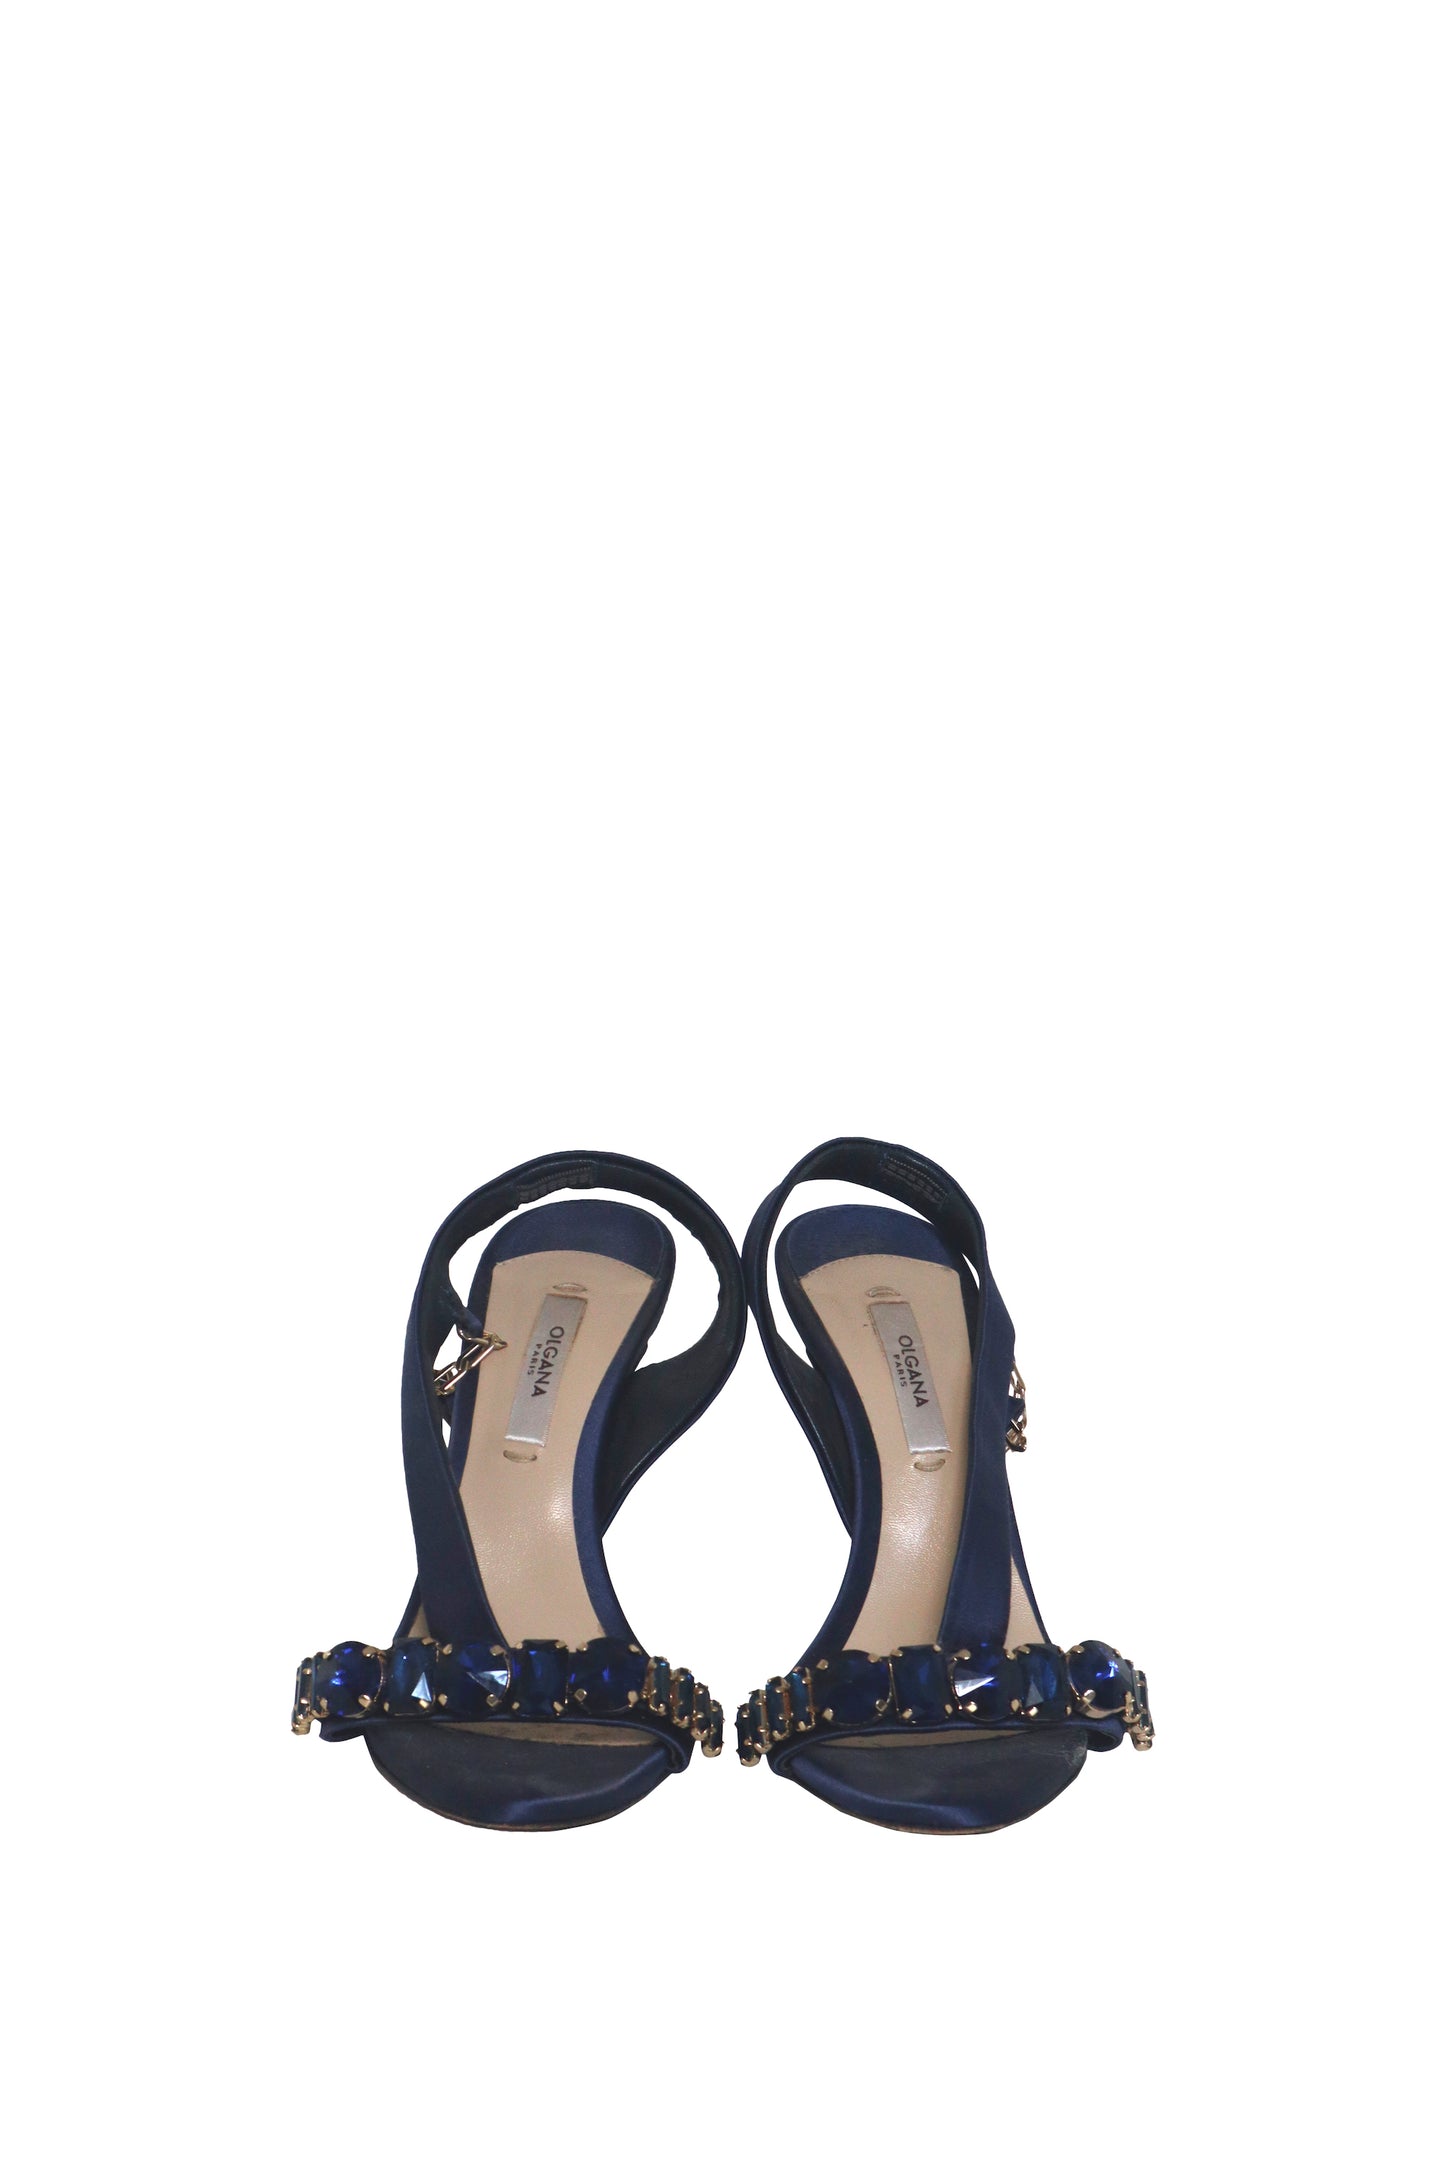 OLGANA PARIS - Navy Blue Crystal Sandals - Size 37.5